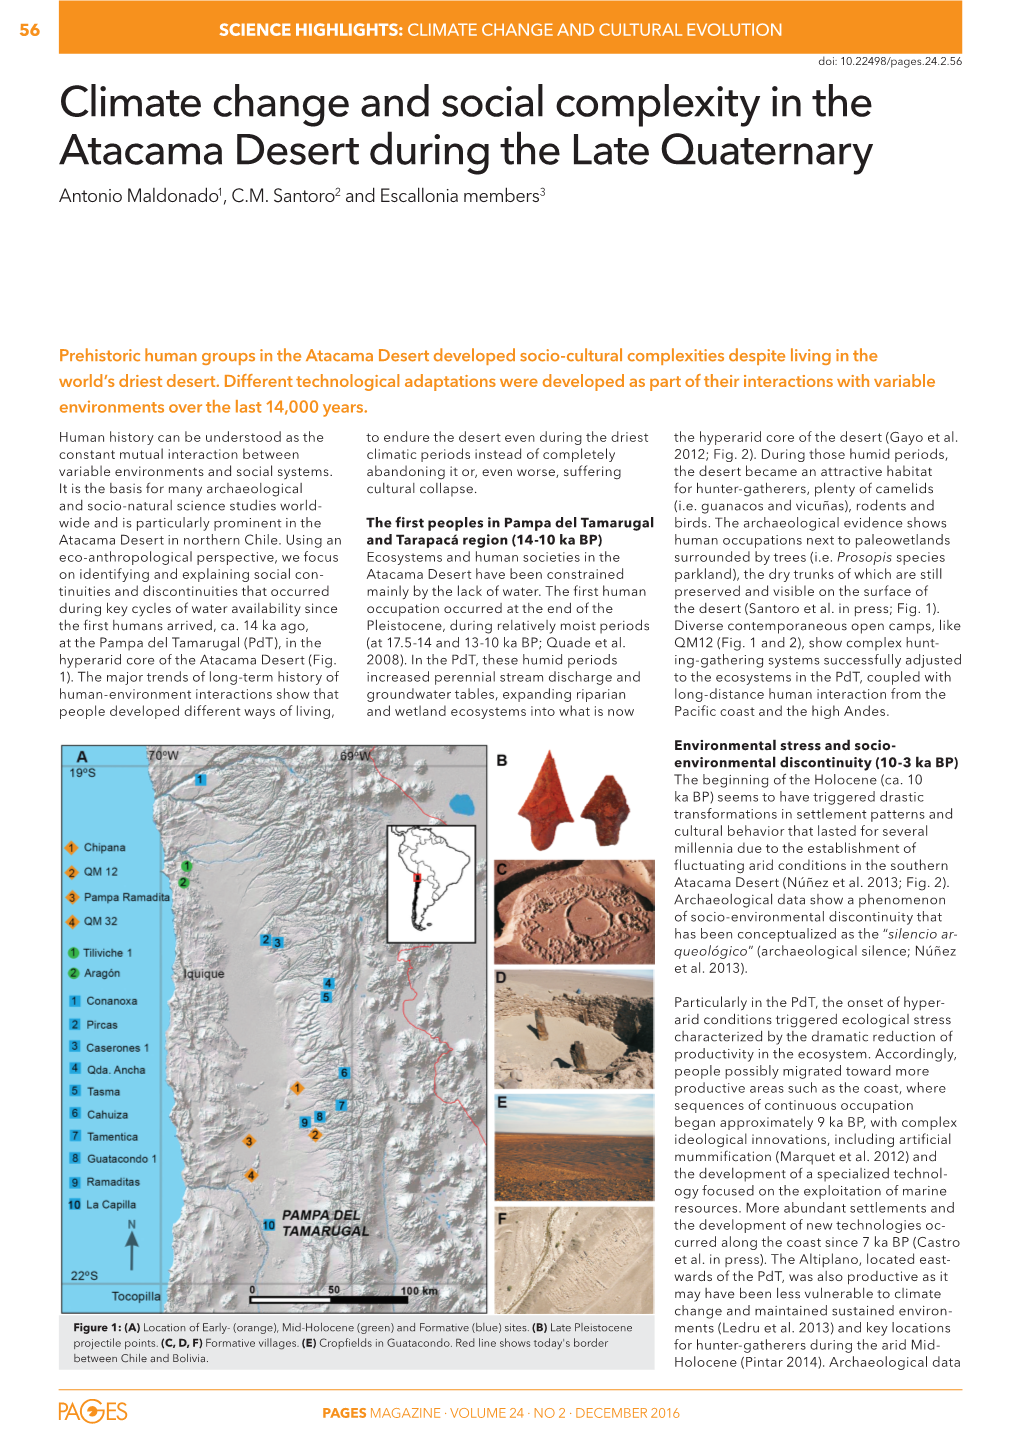 Climate Change and Social Complexity in the Atacama Desert During the Late Quaternary Antonio Maldonado1, C.M